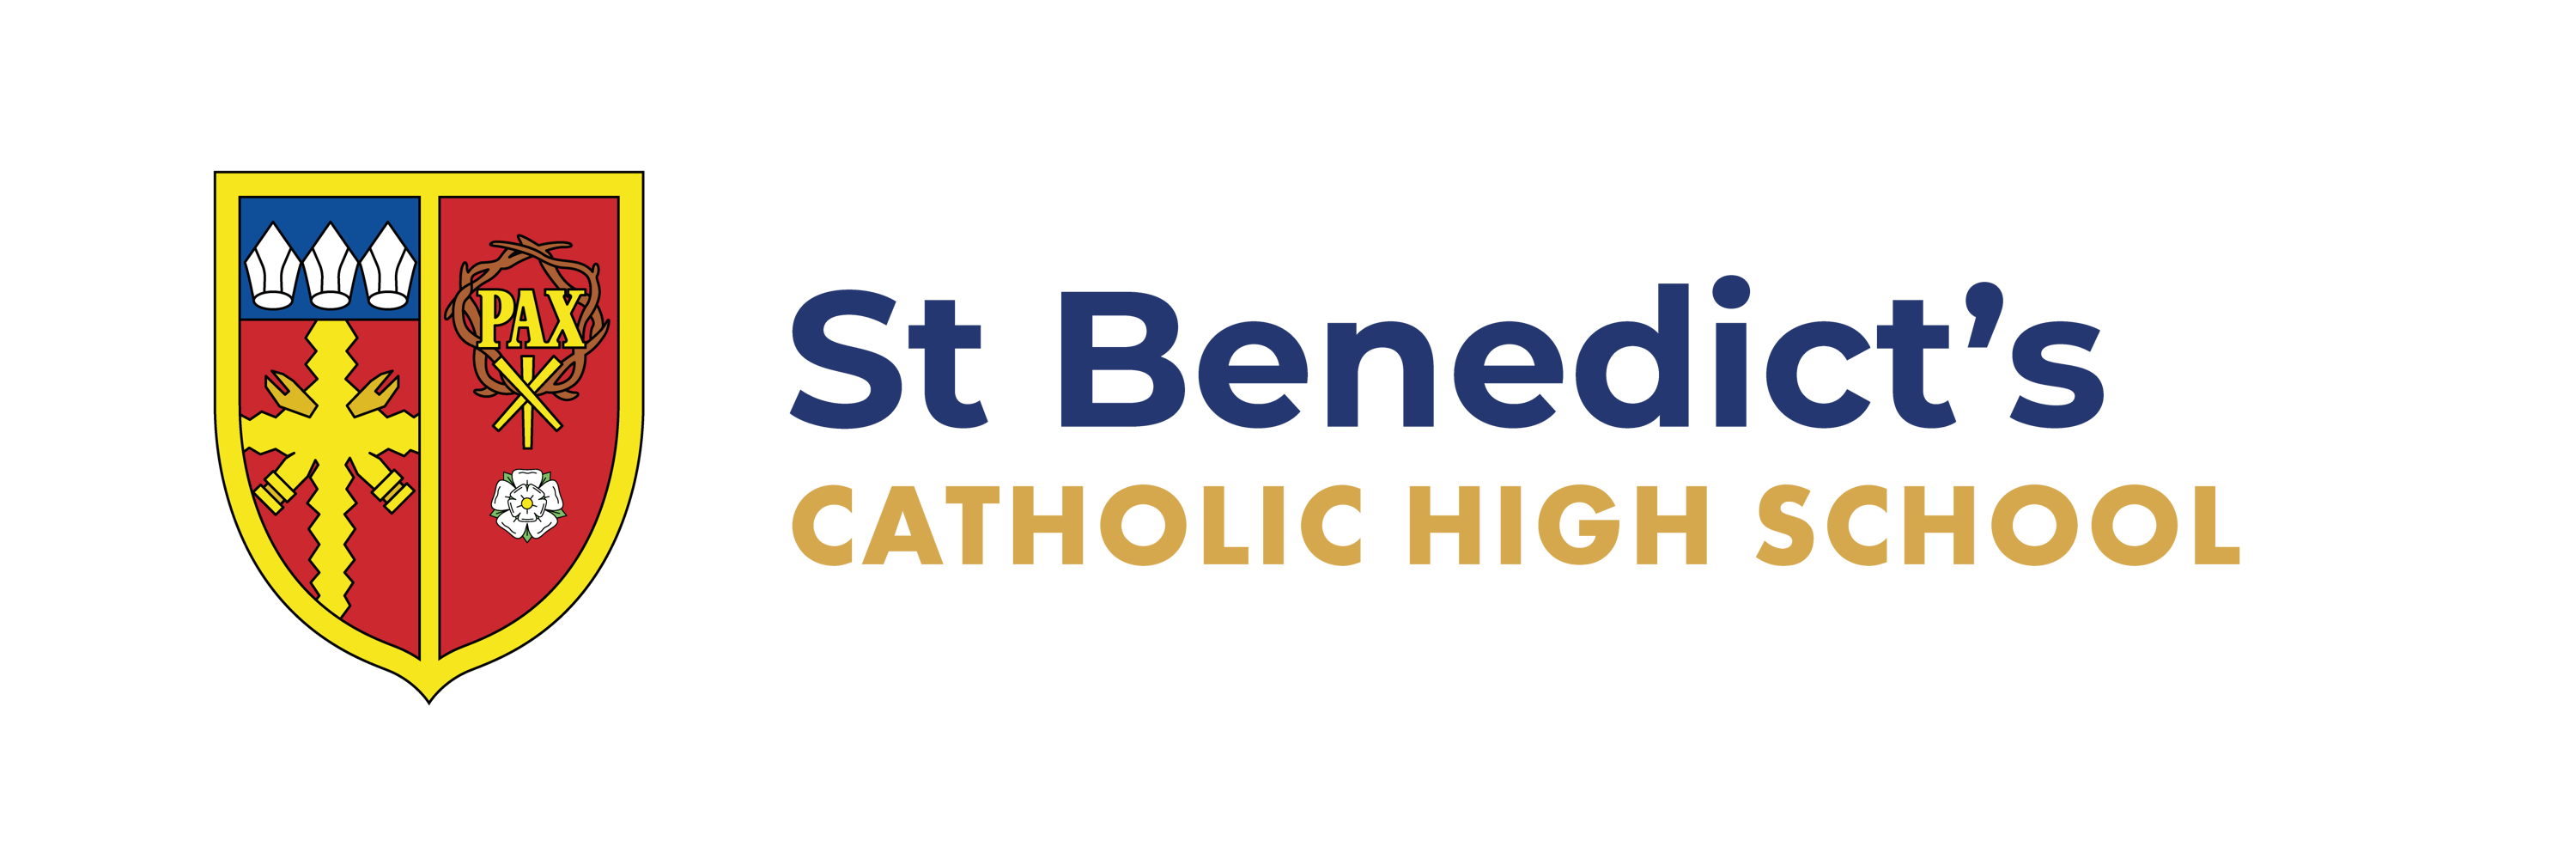 St Benedict's Logo Left Aligned